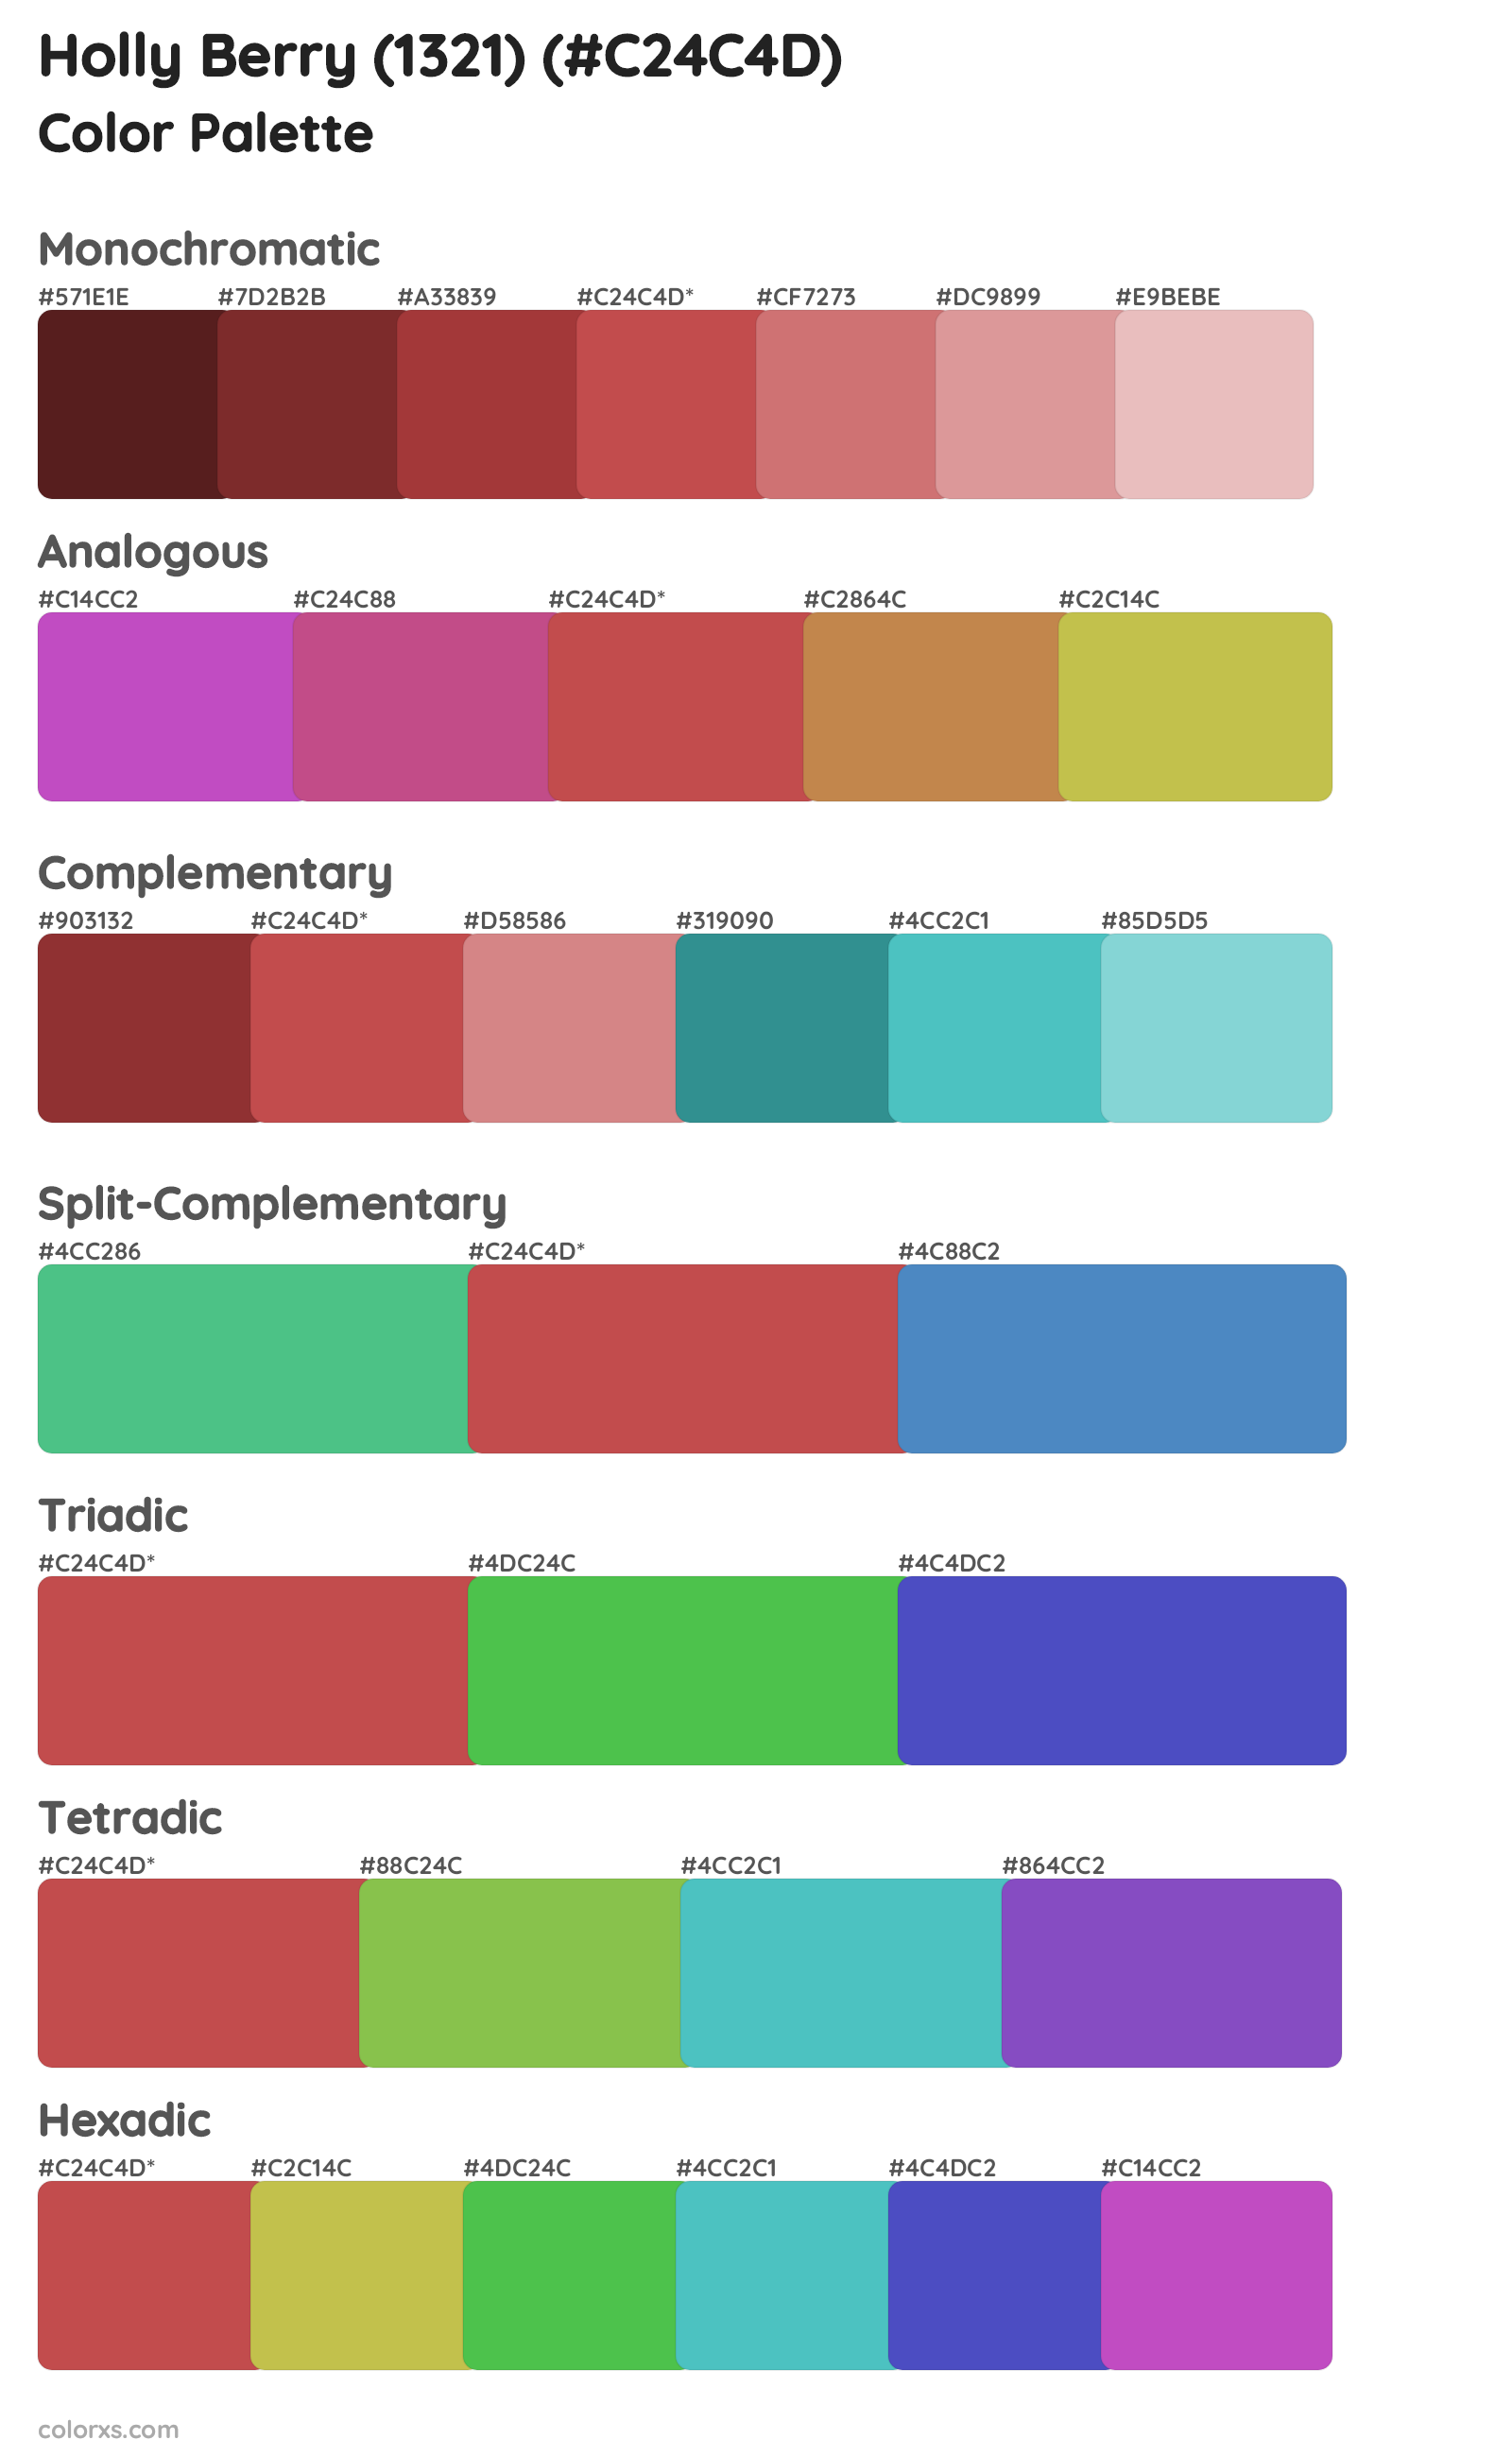 Holly Berry (1321) Color Scheme Palettes